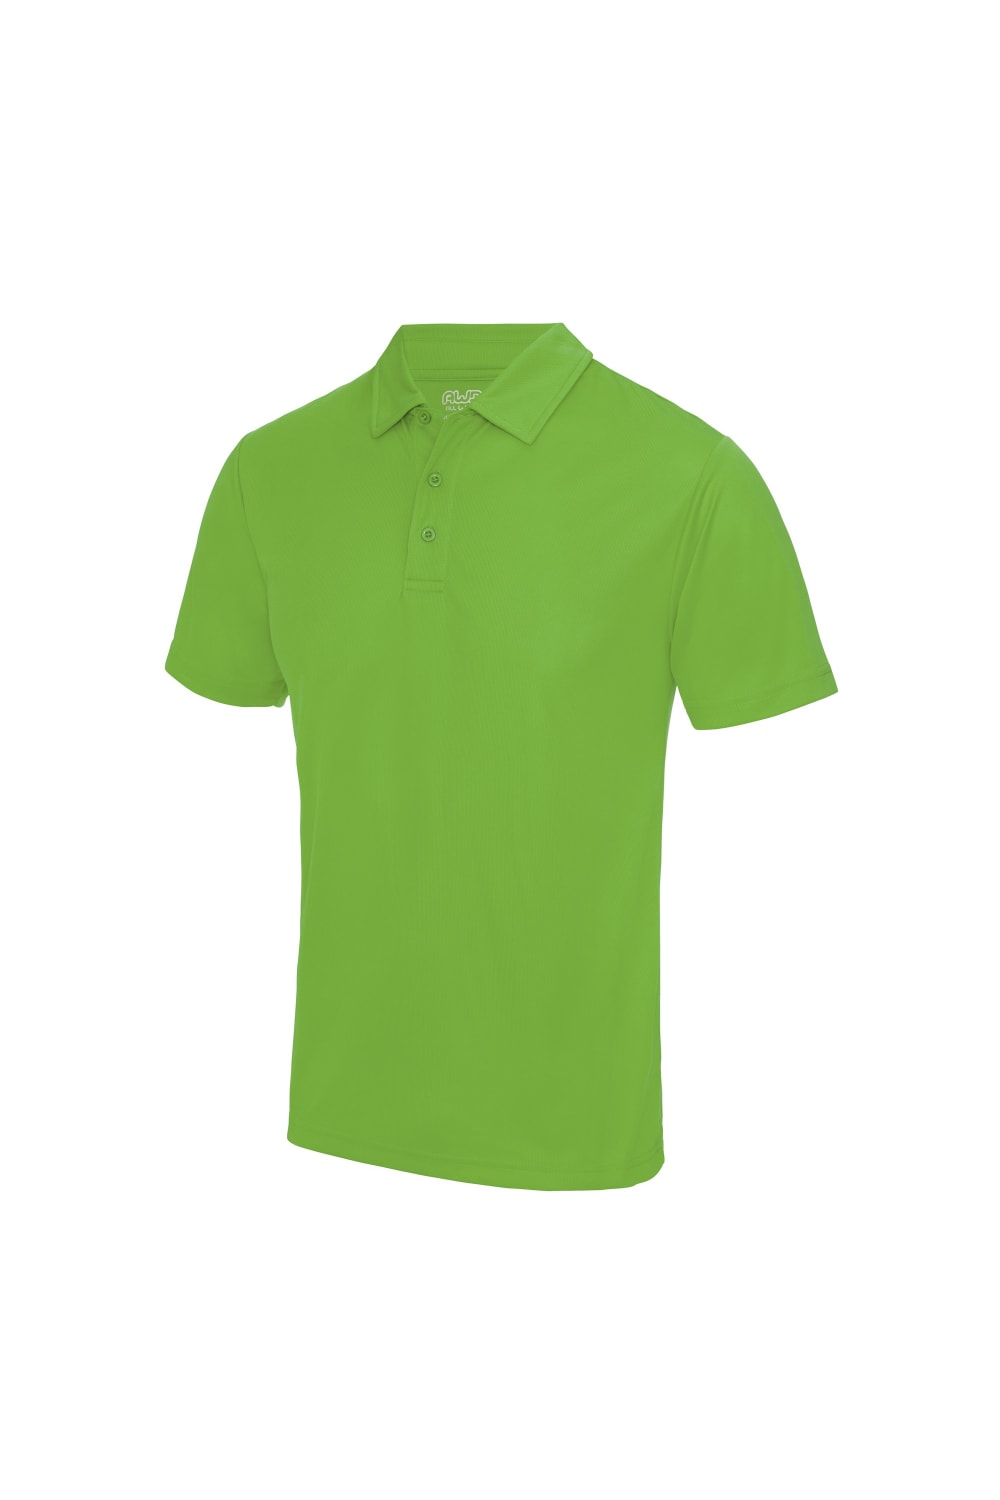 Mens Plain Sports Polo Shirt - Lime Green